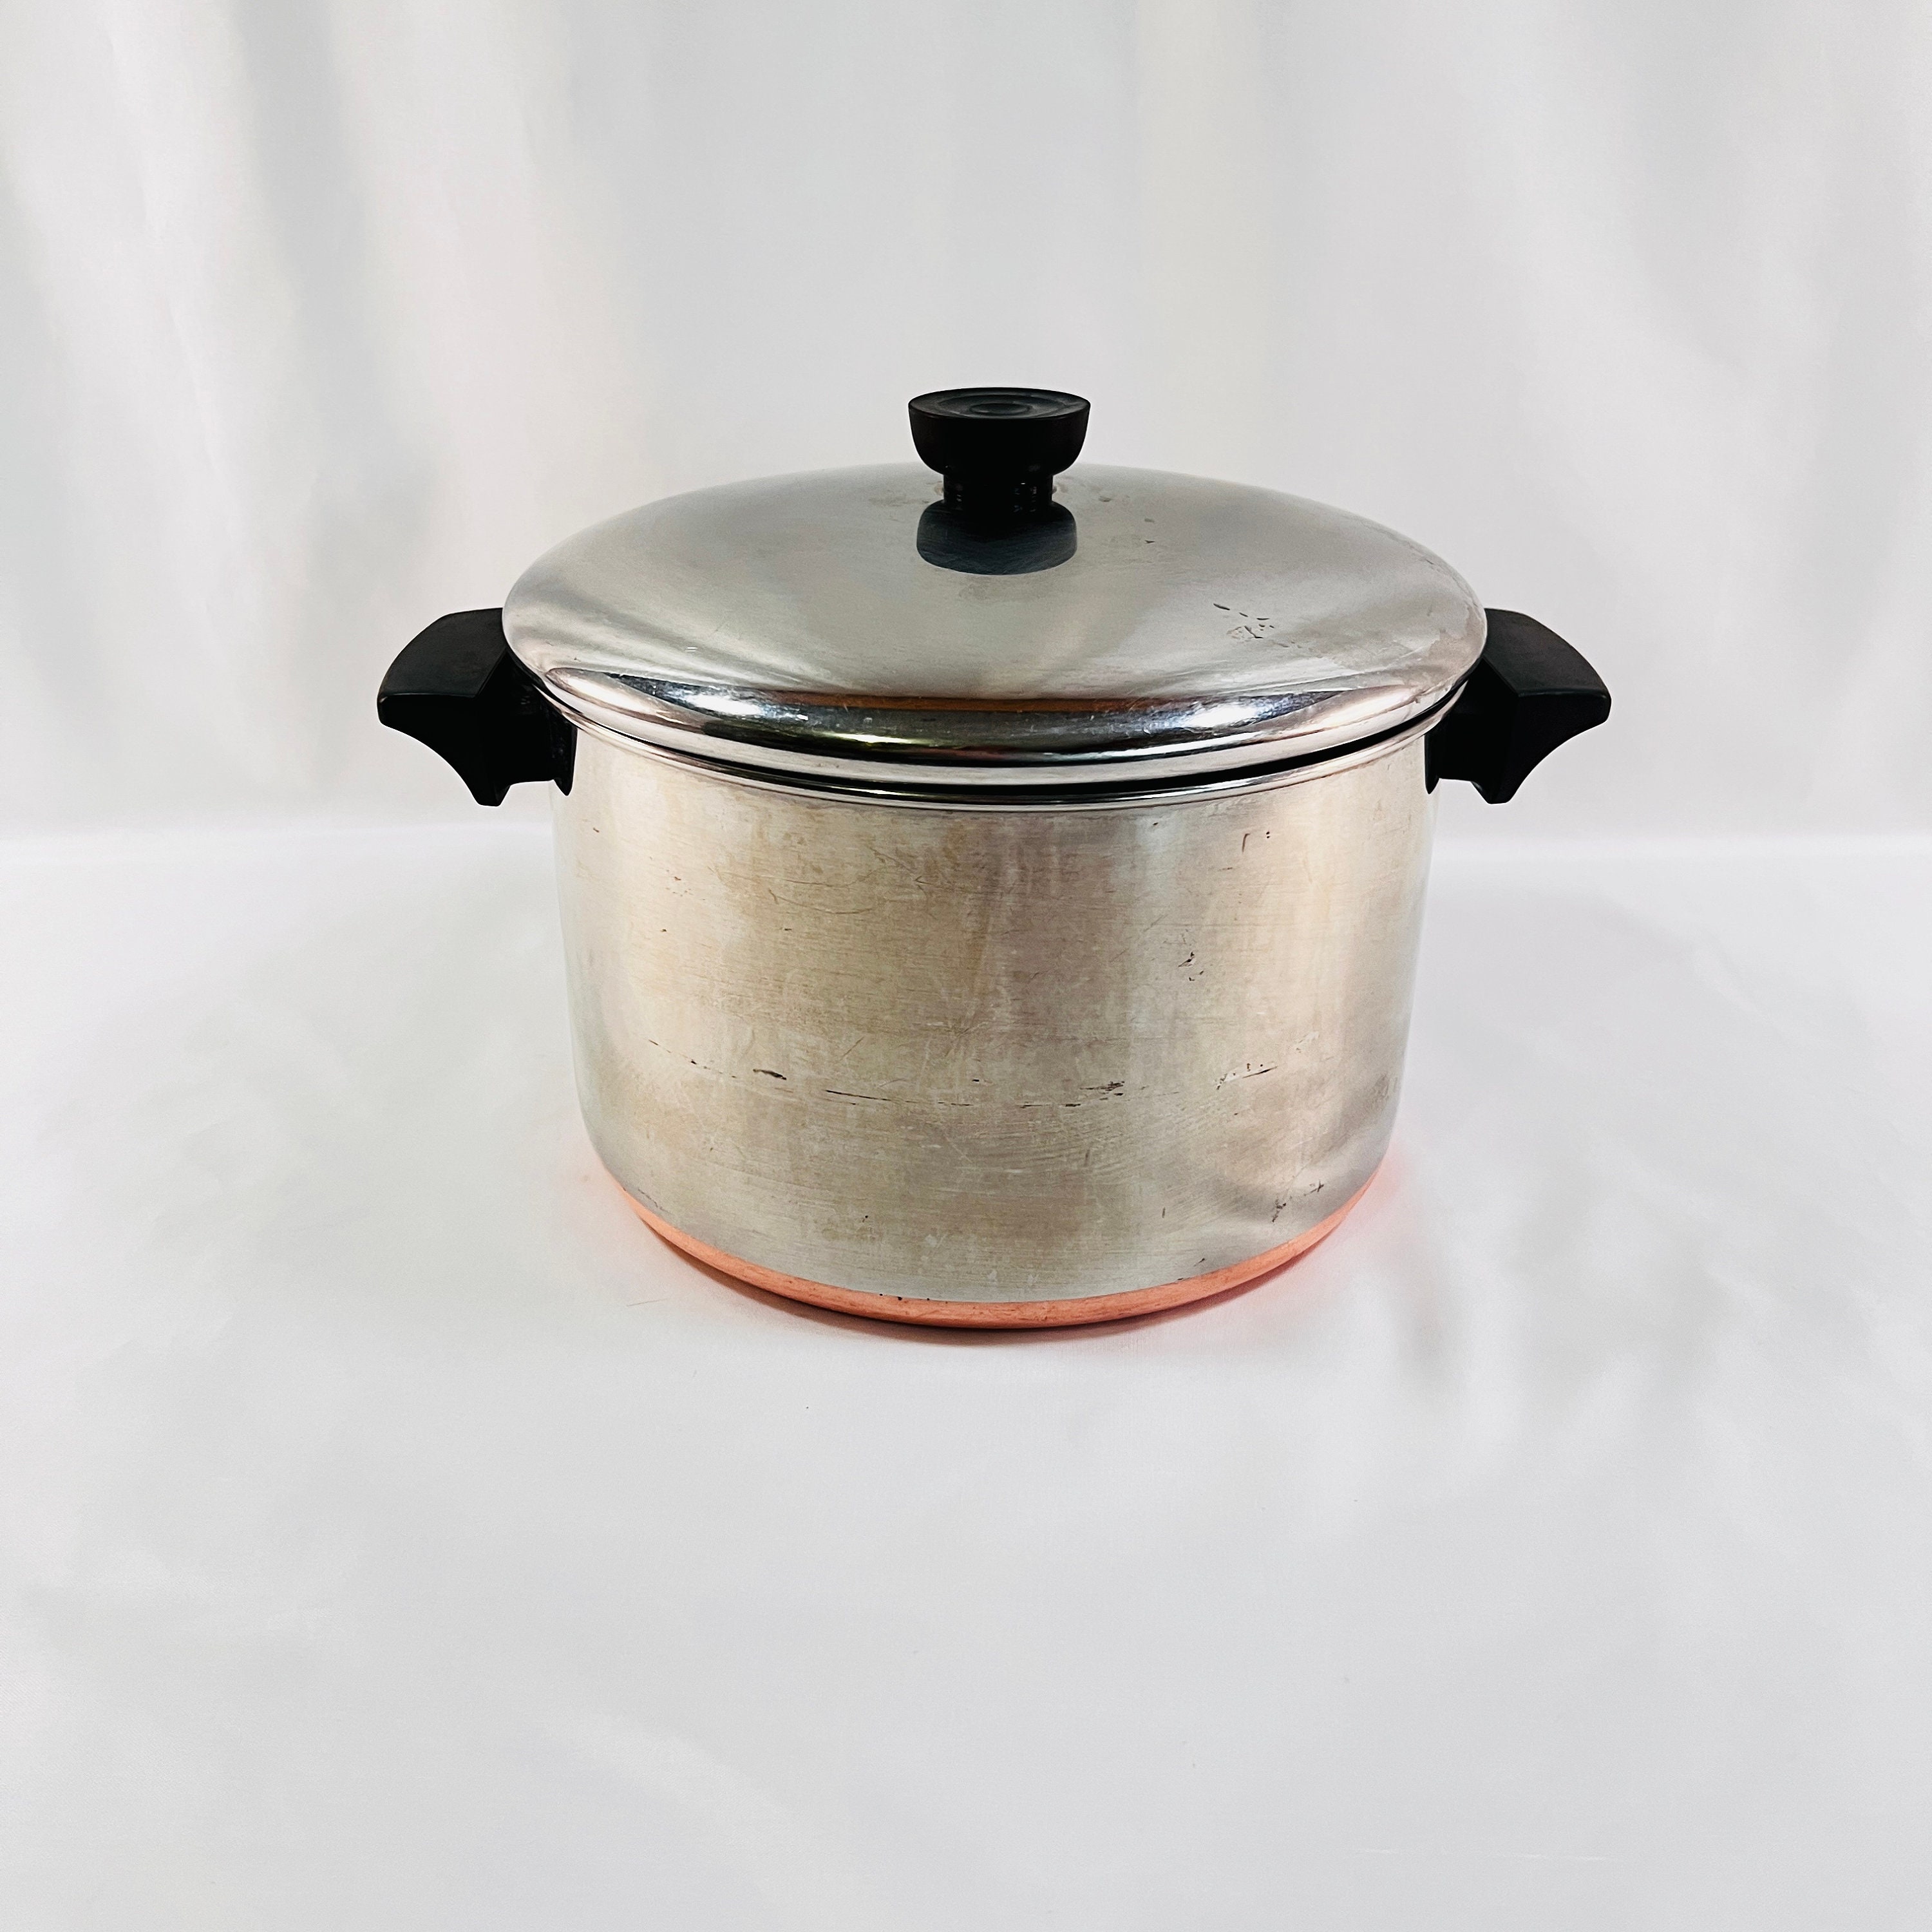 Revere Ware Copper Bottom 10 Quart Stock Pot w/ Lid for Sale in